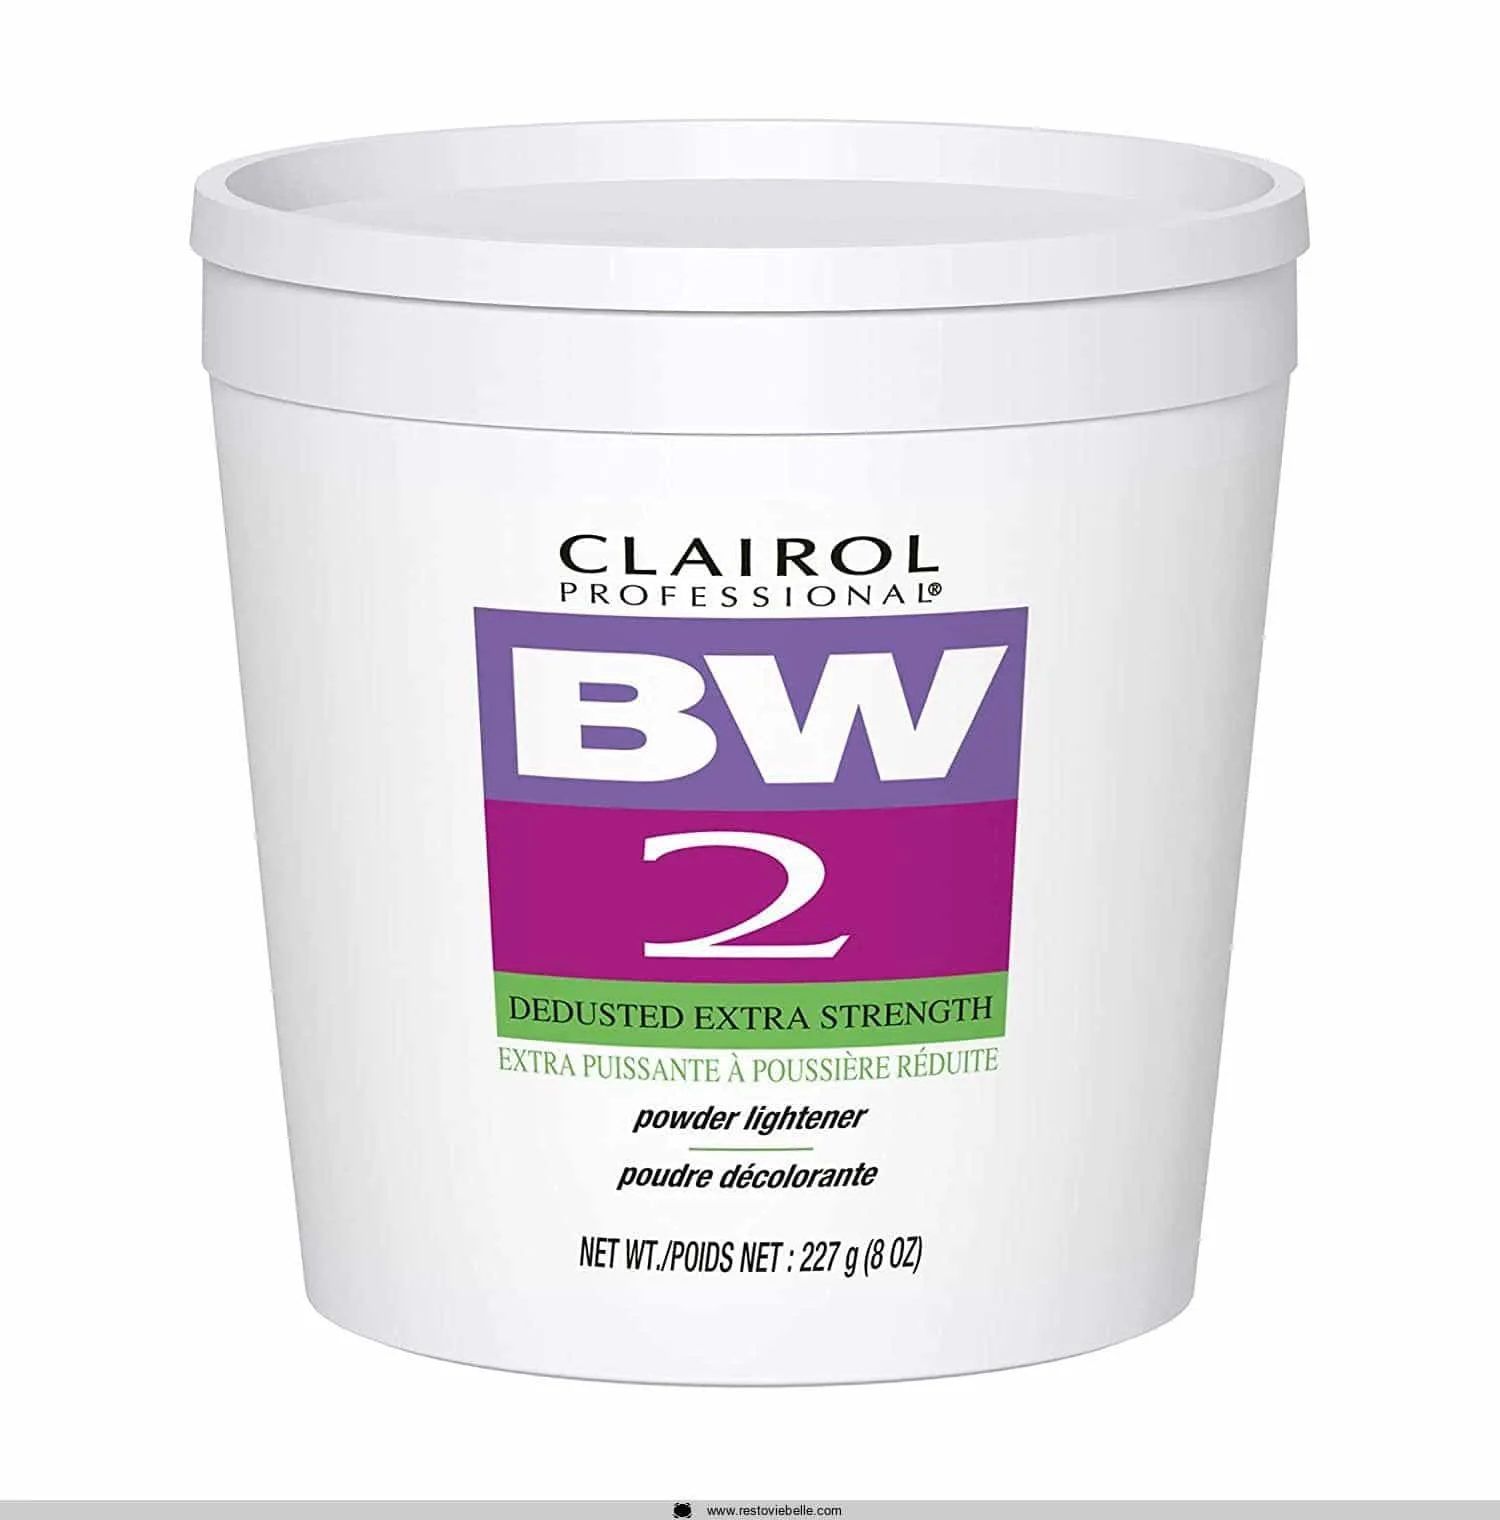 Clairol Professional BW2 Hair Powder